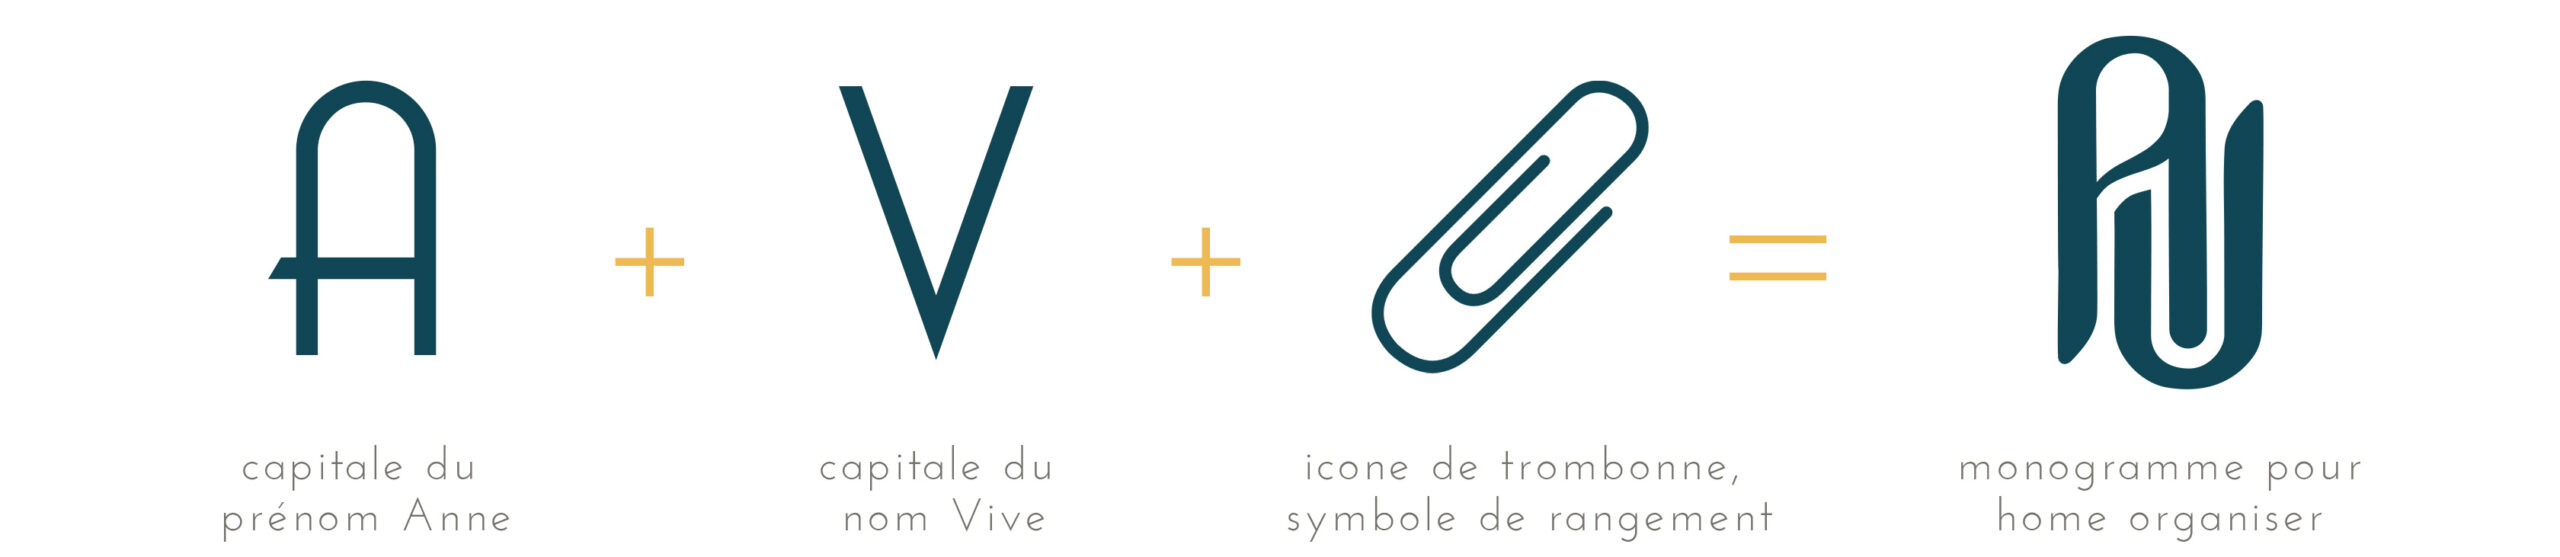 explication logo monogramme